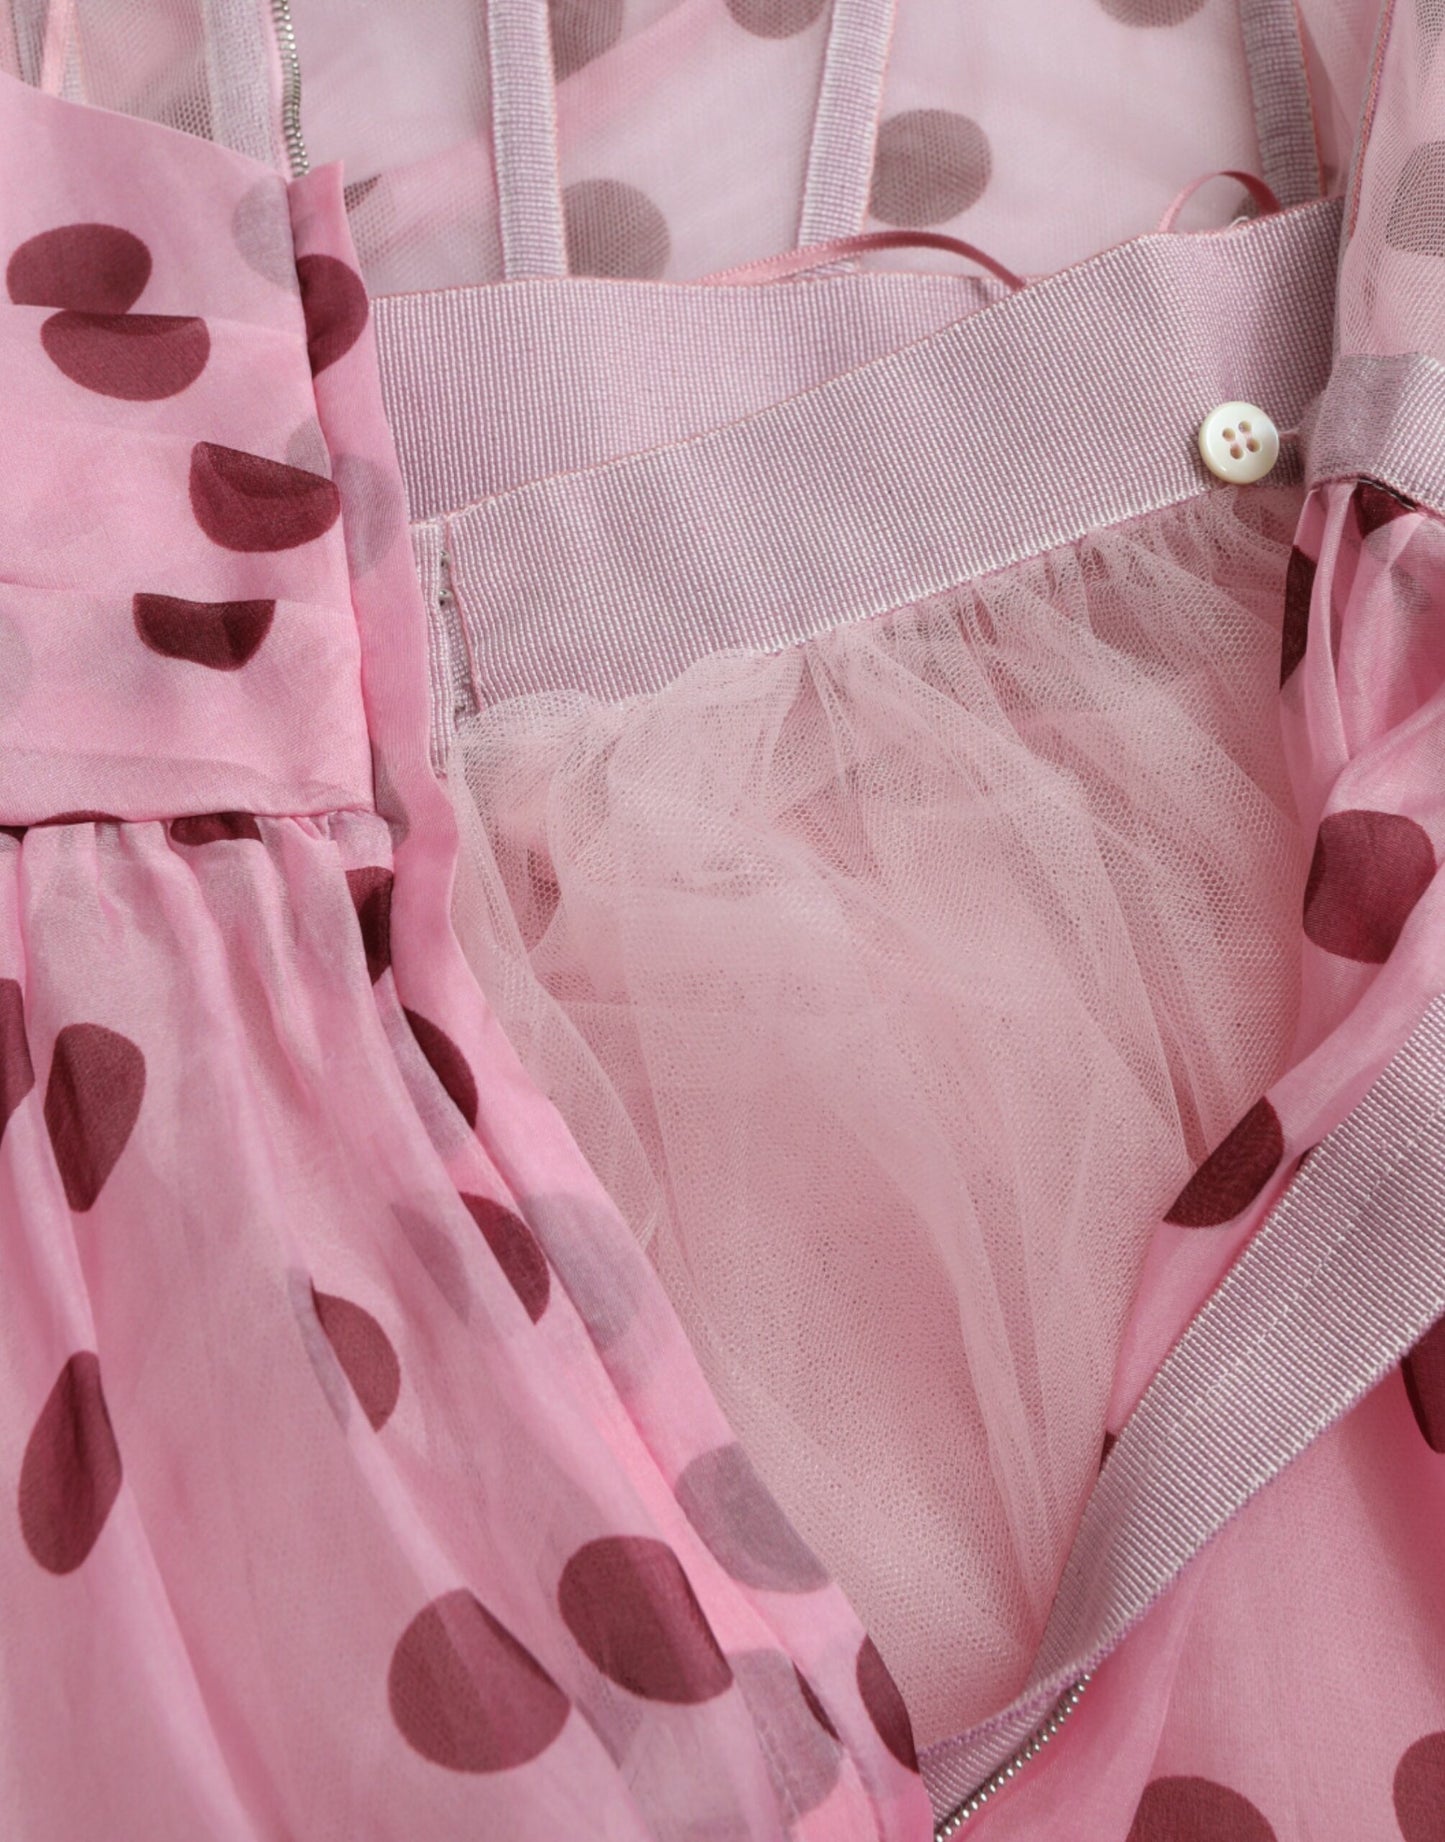 Dolce & Gabbana Chic A-Line Strapless Silk Dress in Pink